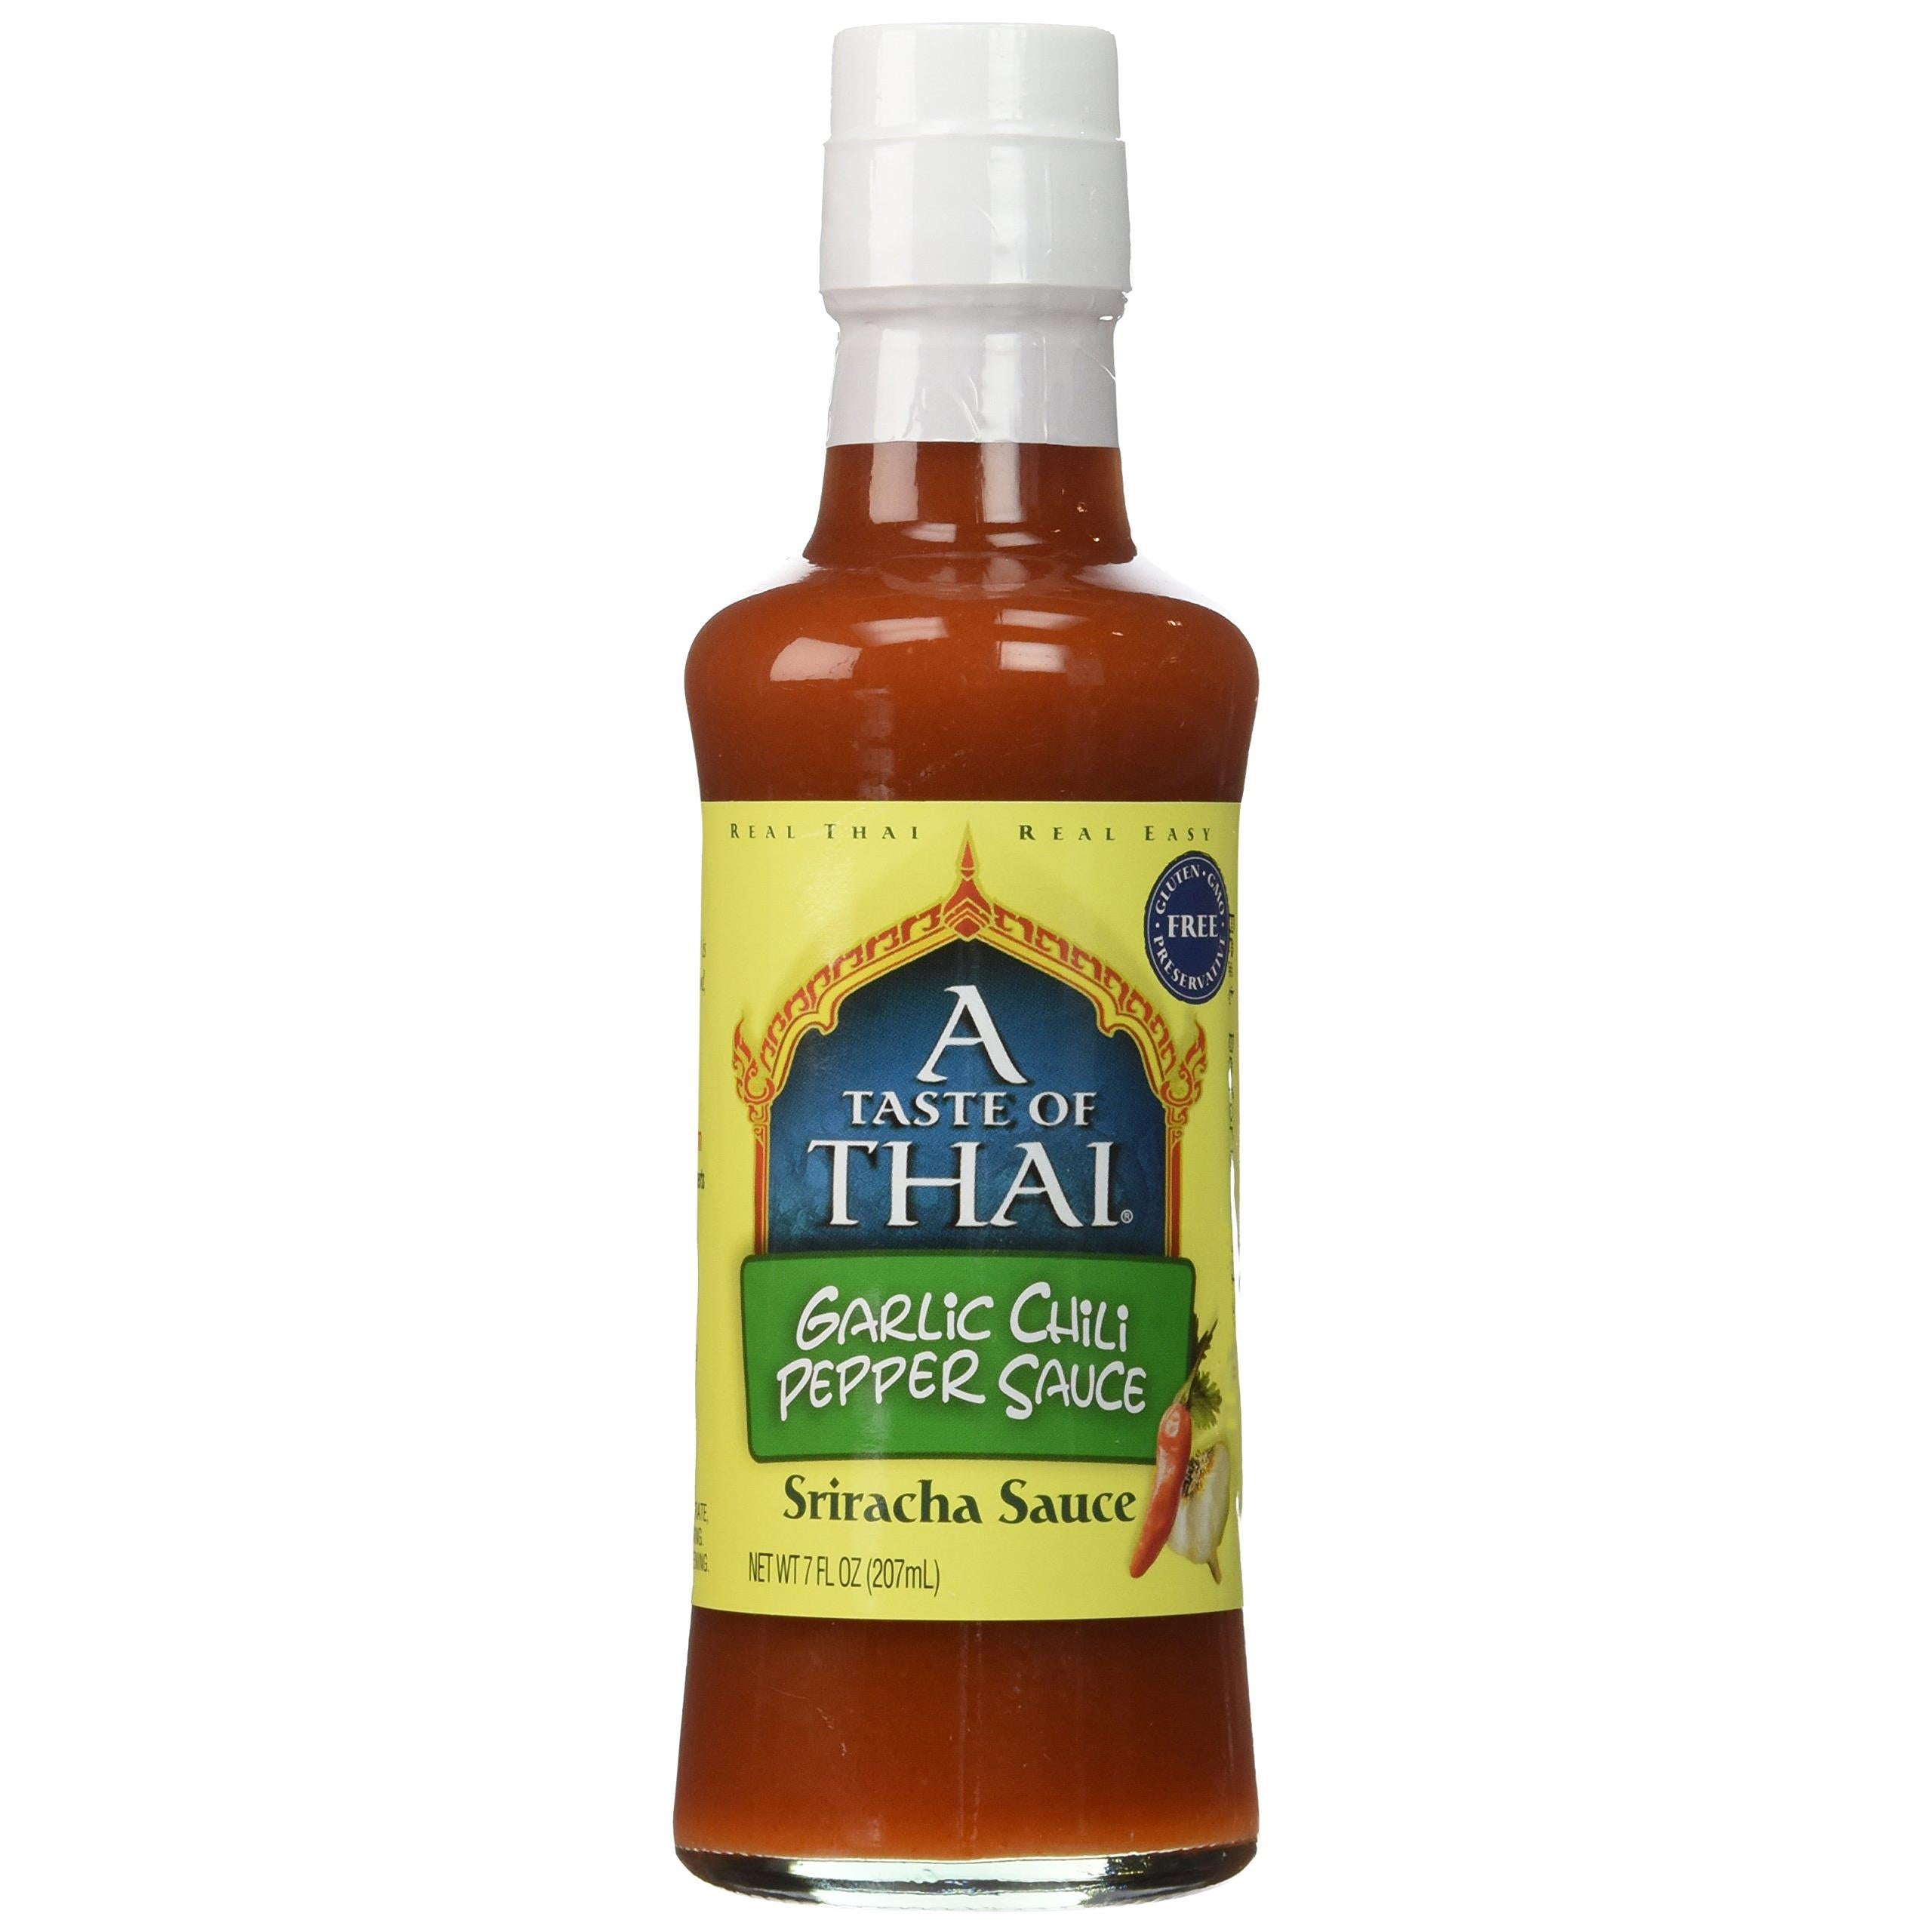 A Taste of Thai Garlic Chili Pepper Sauce, 7 fl oz